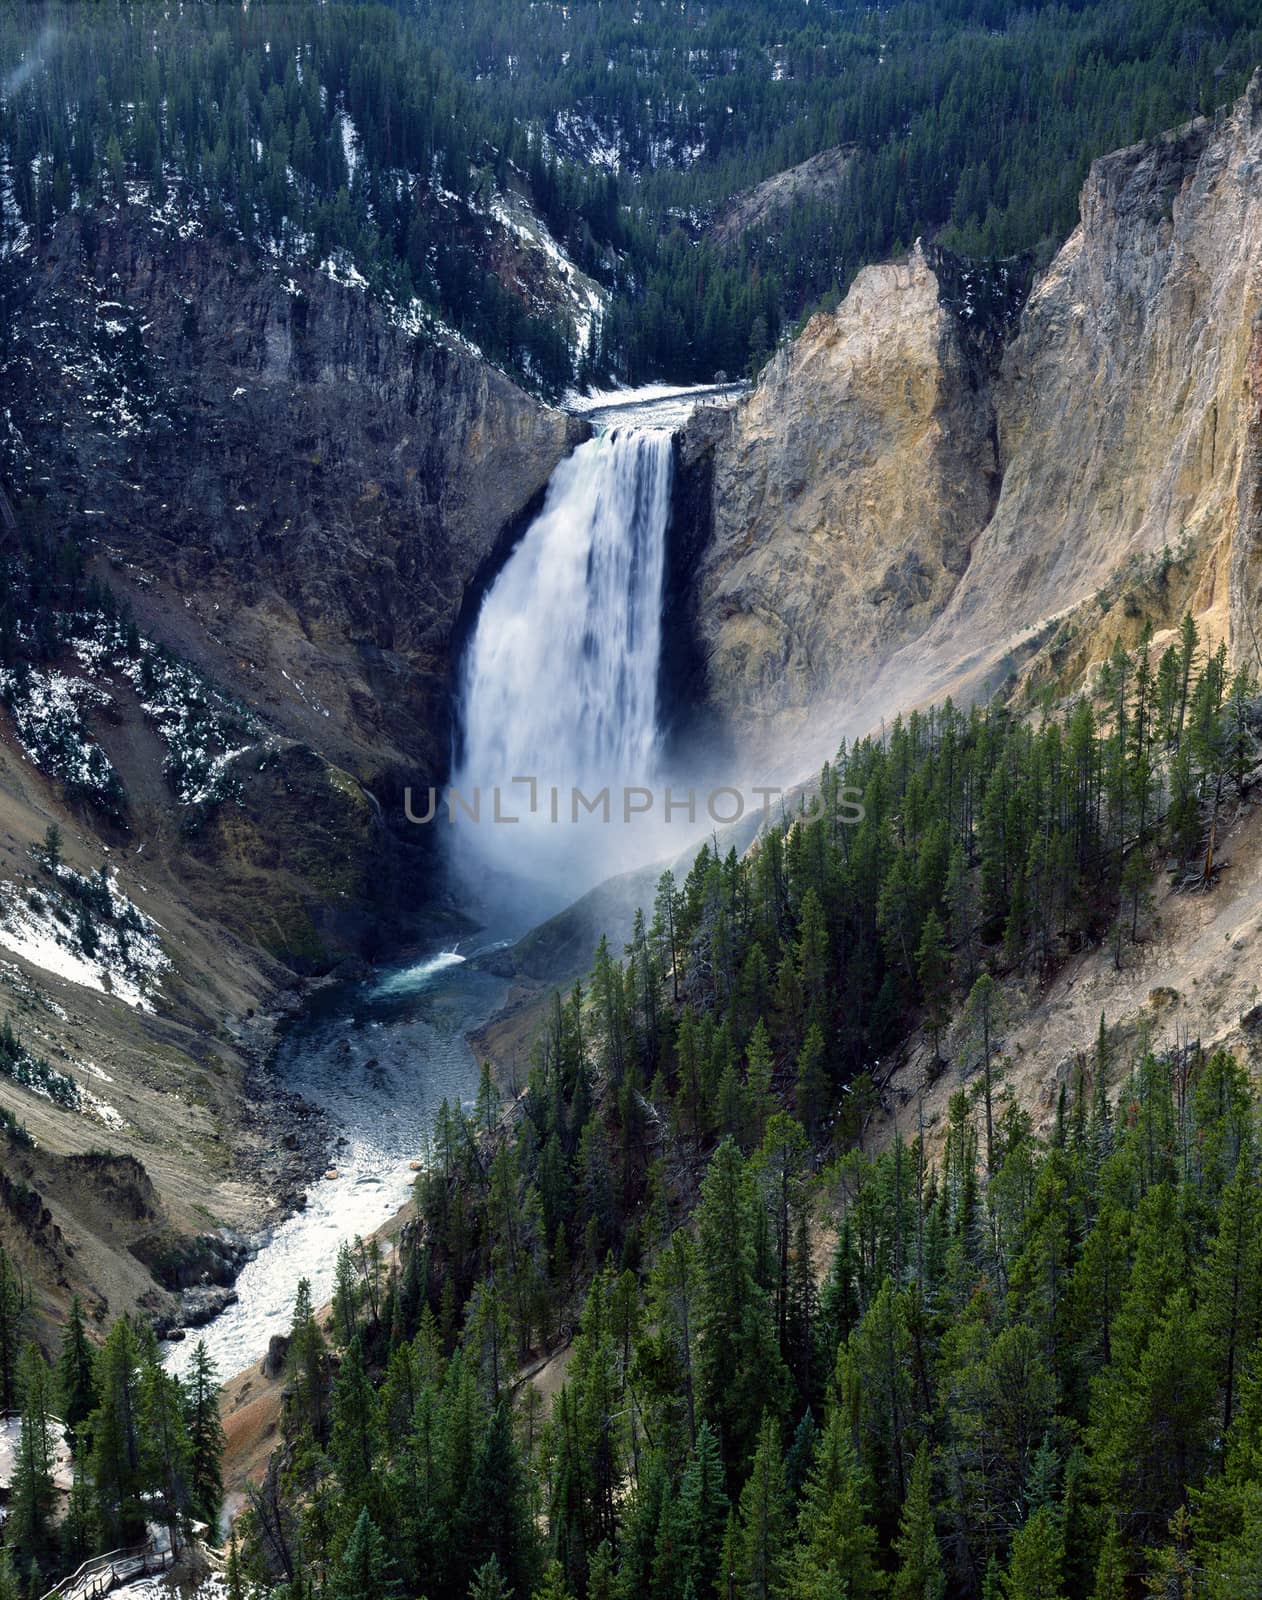 Lower Falls, Yellowstone National Park